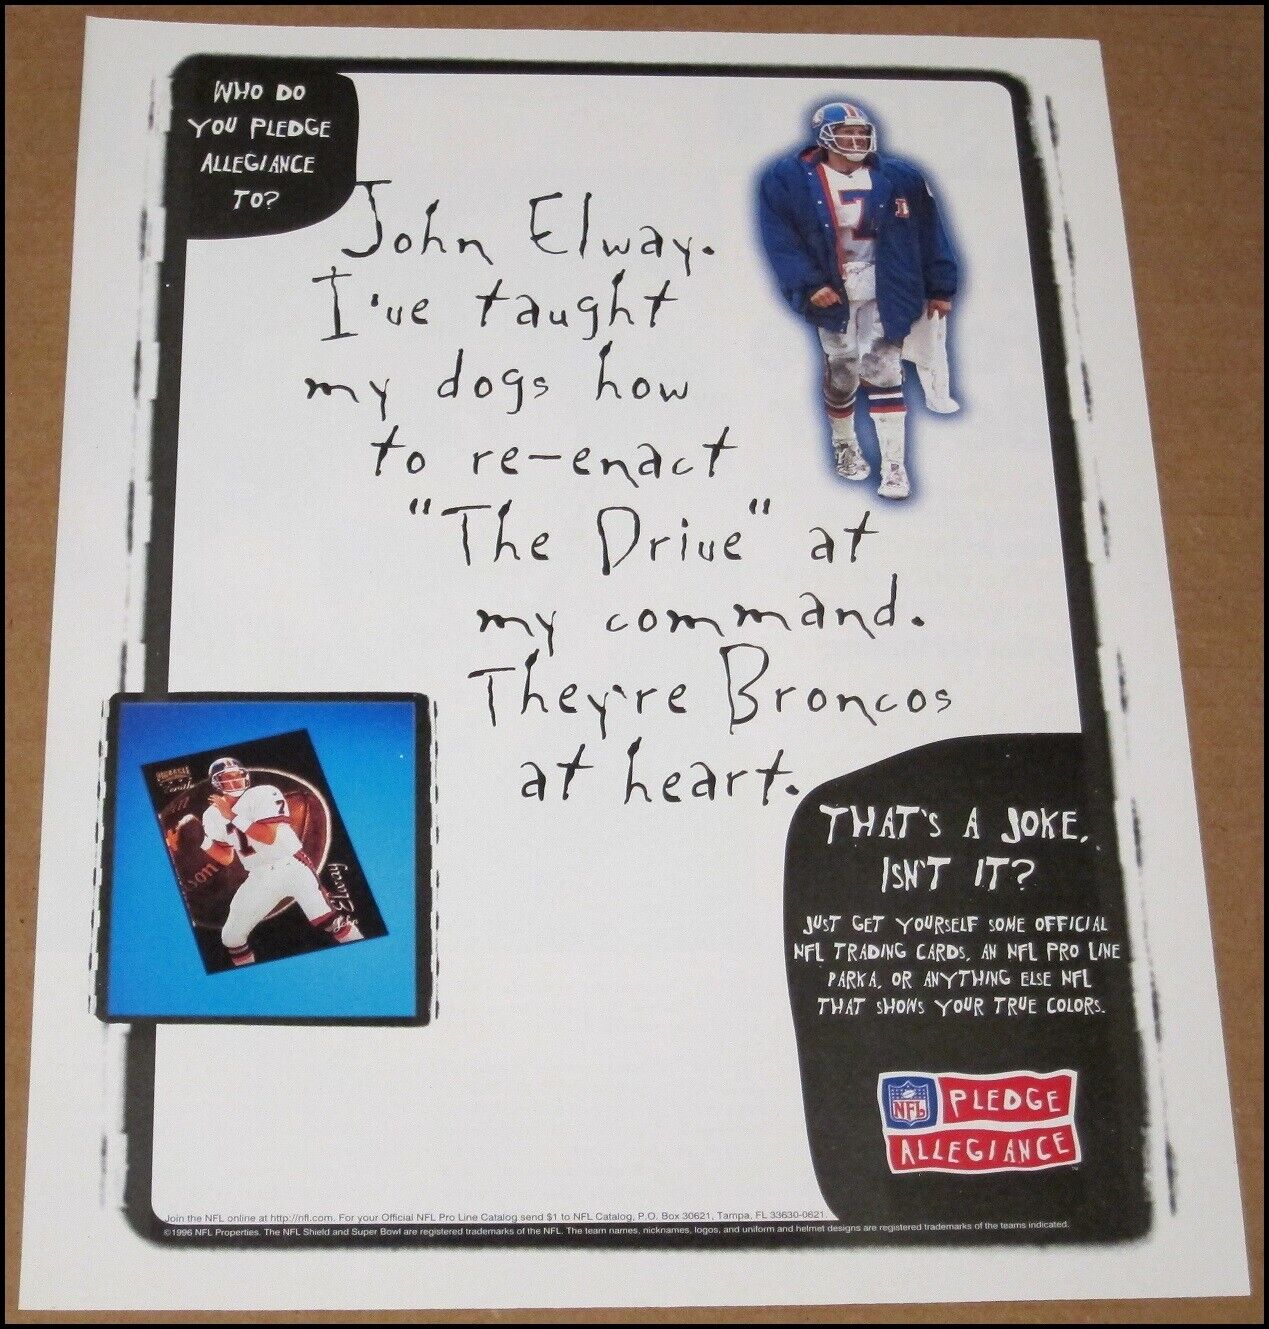 1996 John Elway NFL Pledge Allegiance Print Ad Advertisement Denver Broncos